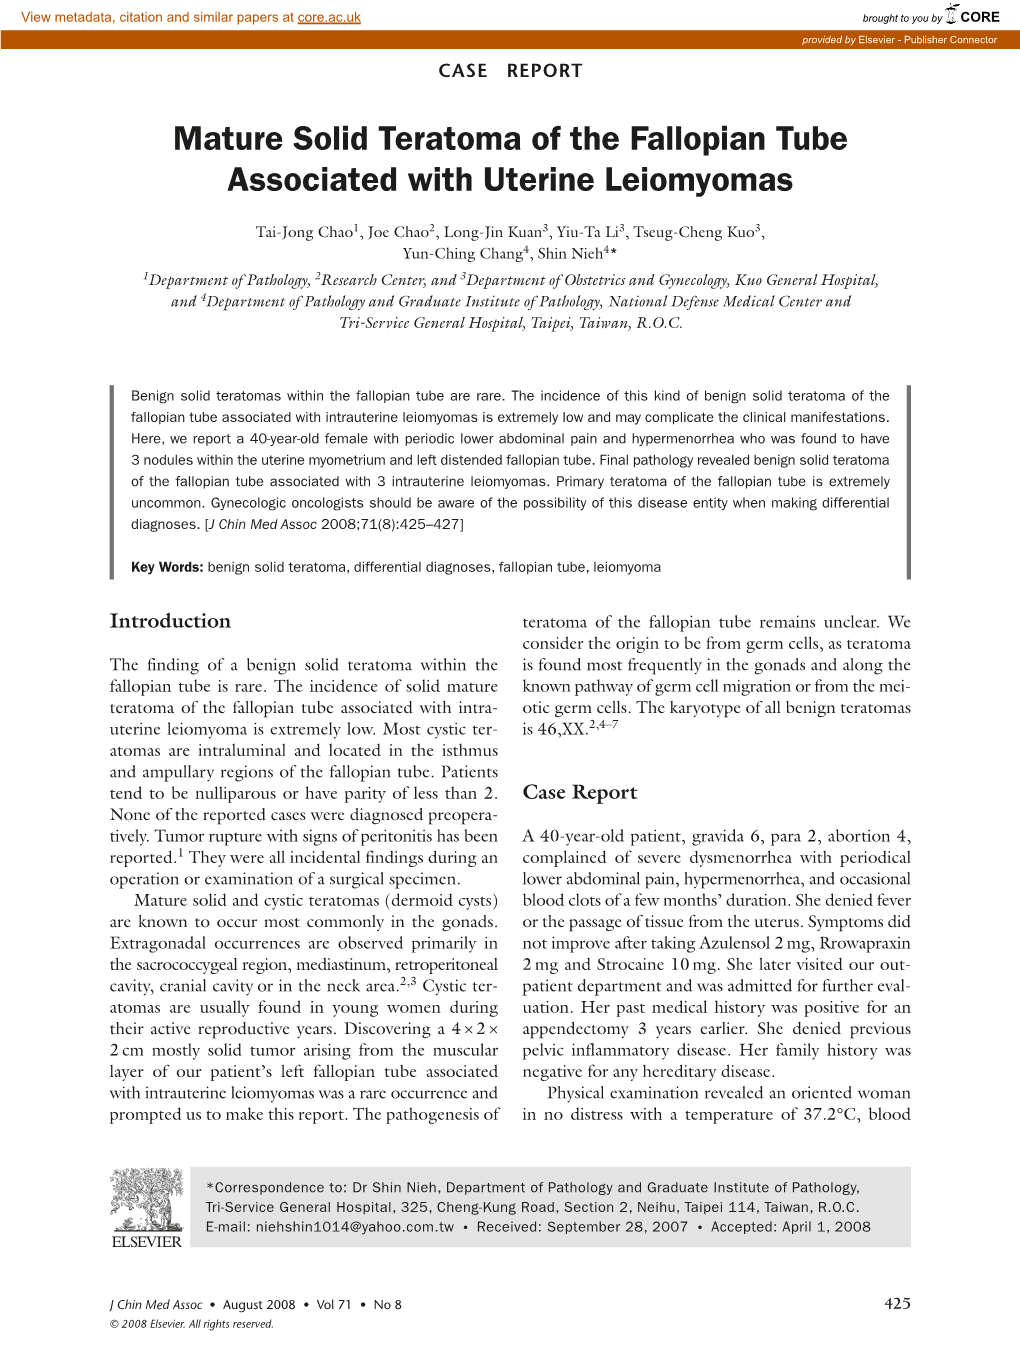 Mature Solid Teratoma of the Fallopian Tube Associated with Uterine Leiomyomas